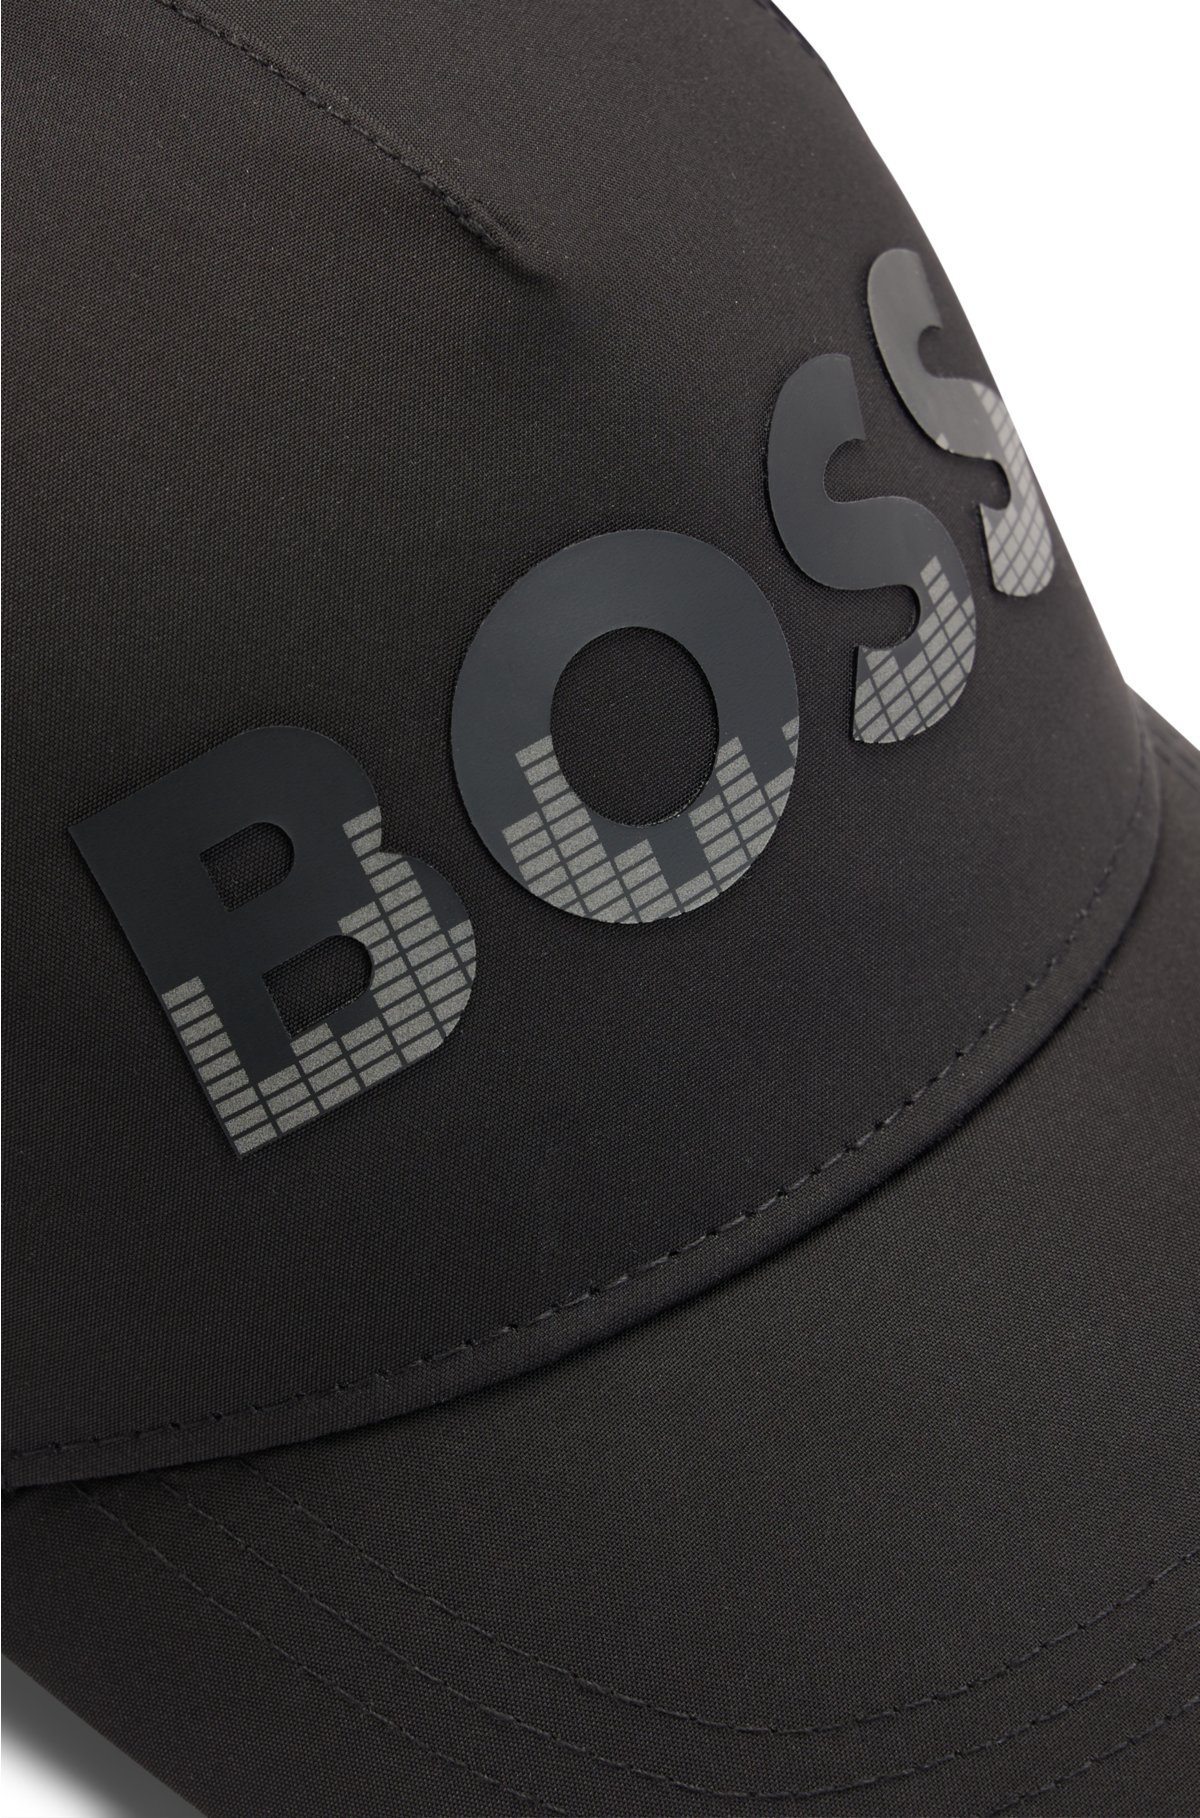 Kids' cap with decorative reflective logo, Black